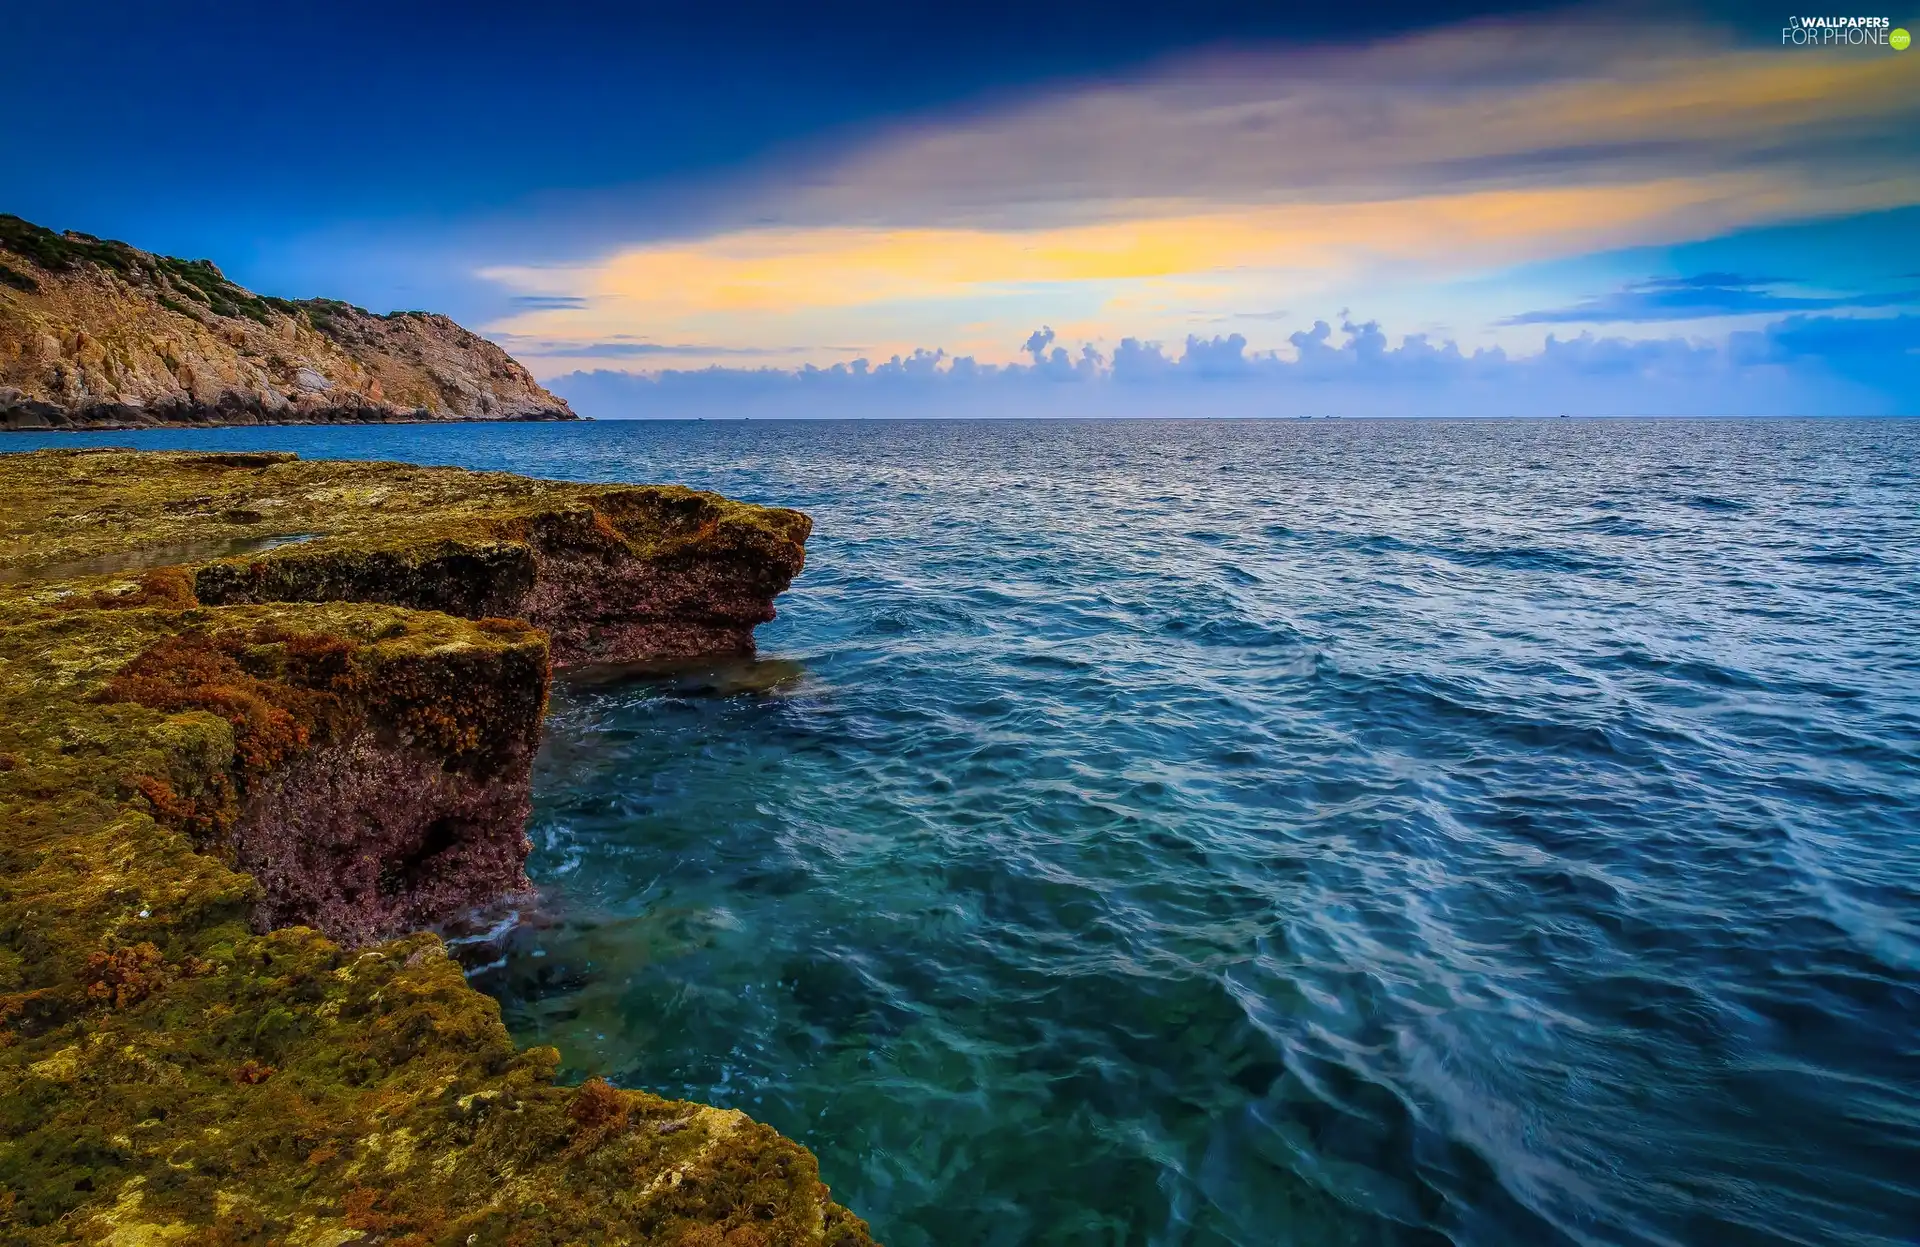 cliff, sea, rocks